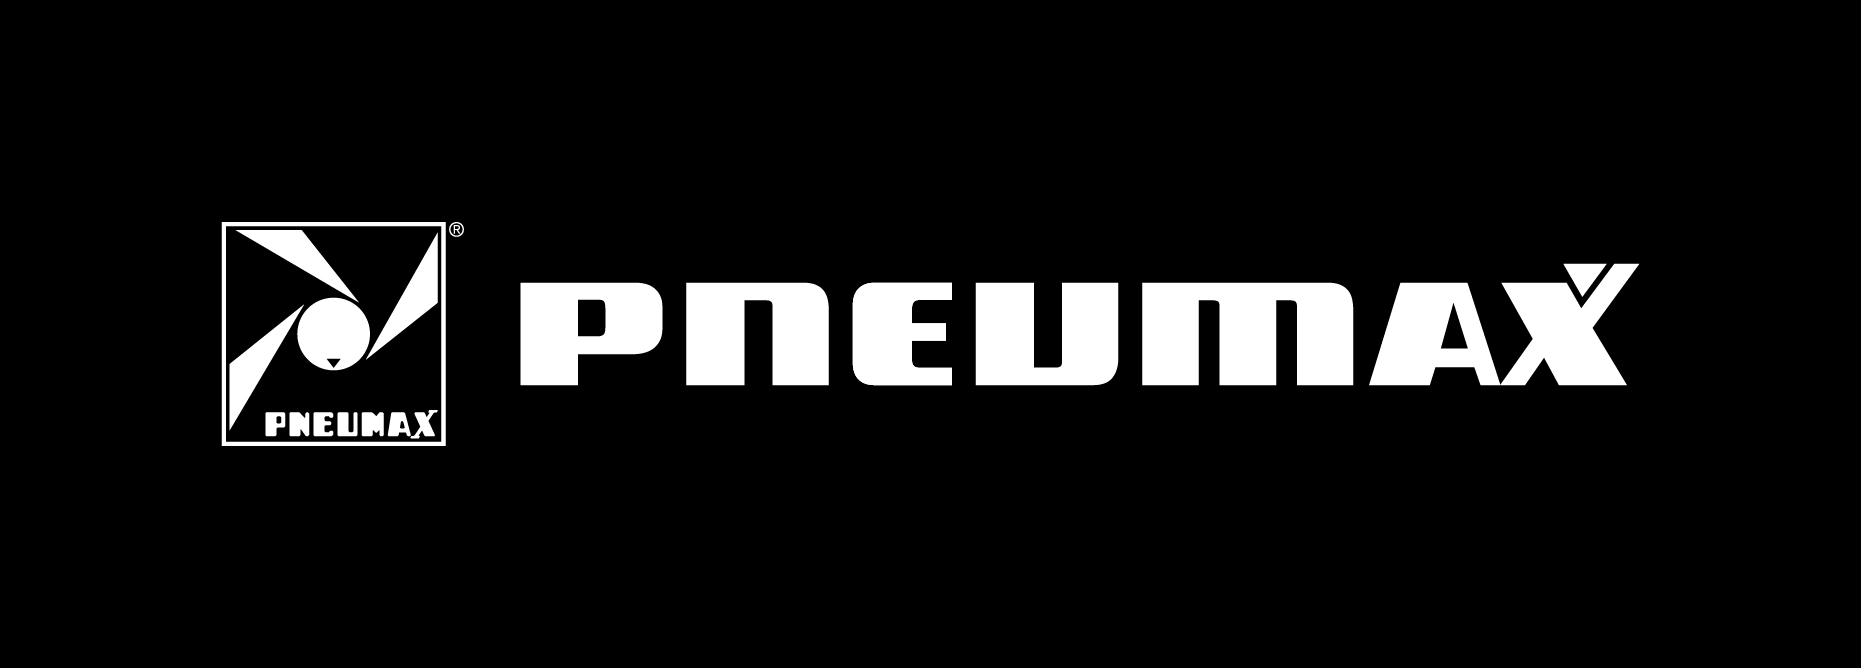 PNEUMAX logo